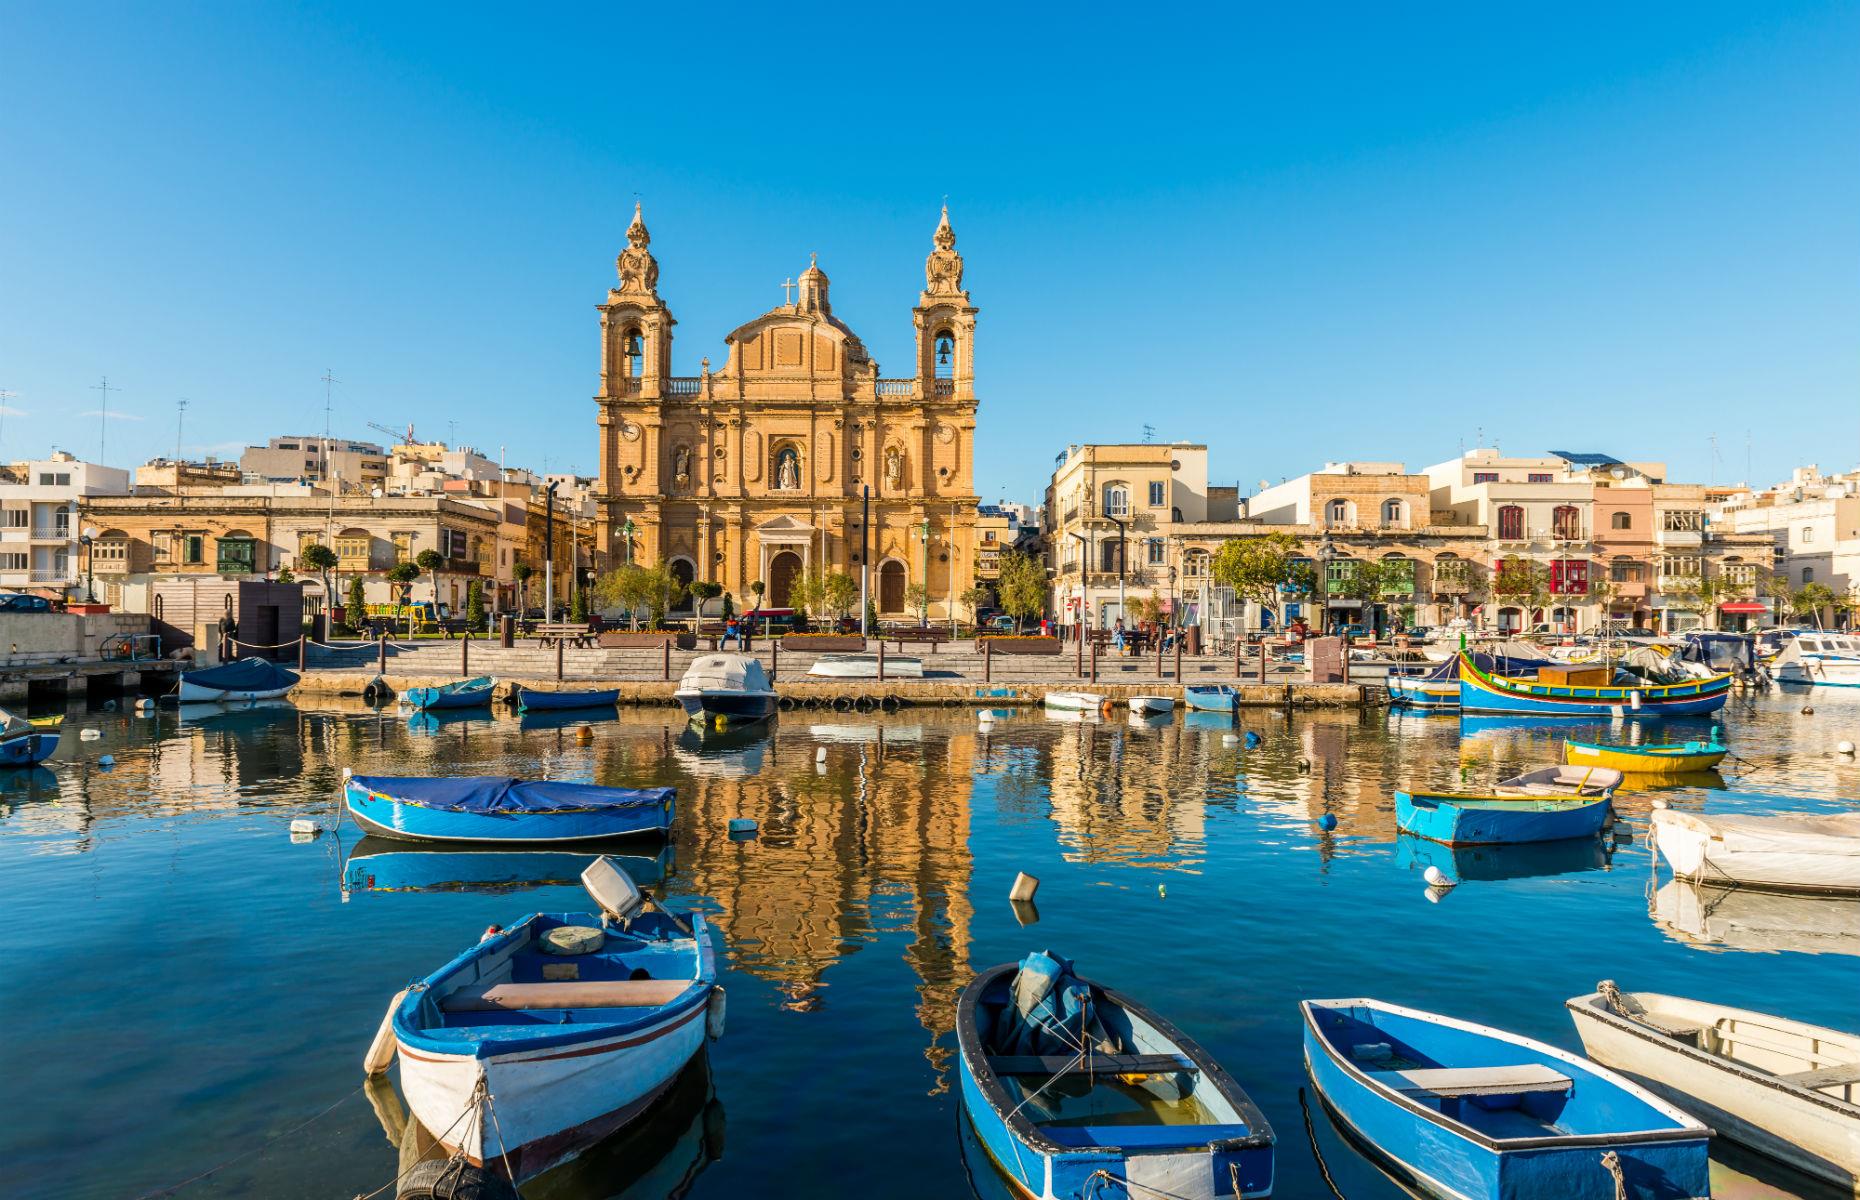 Malta: 150 days